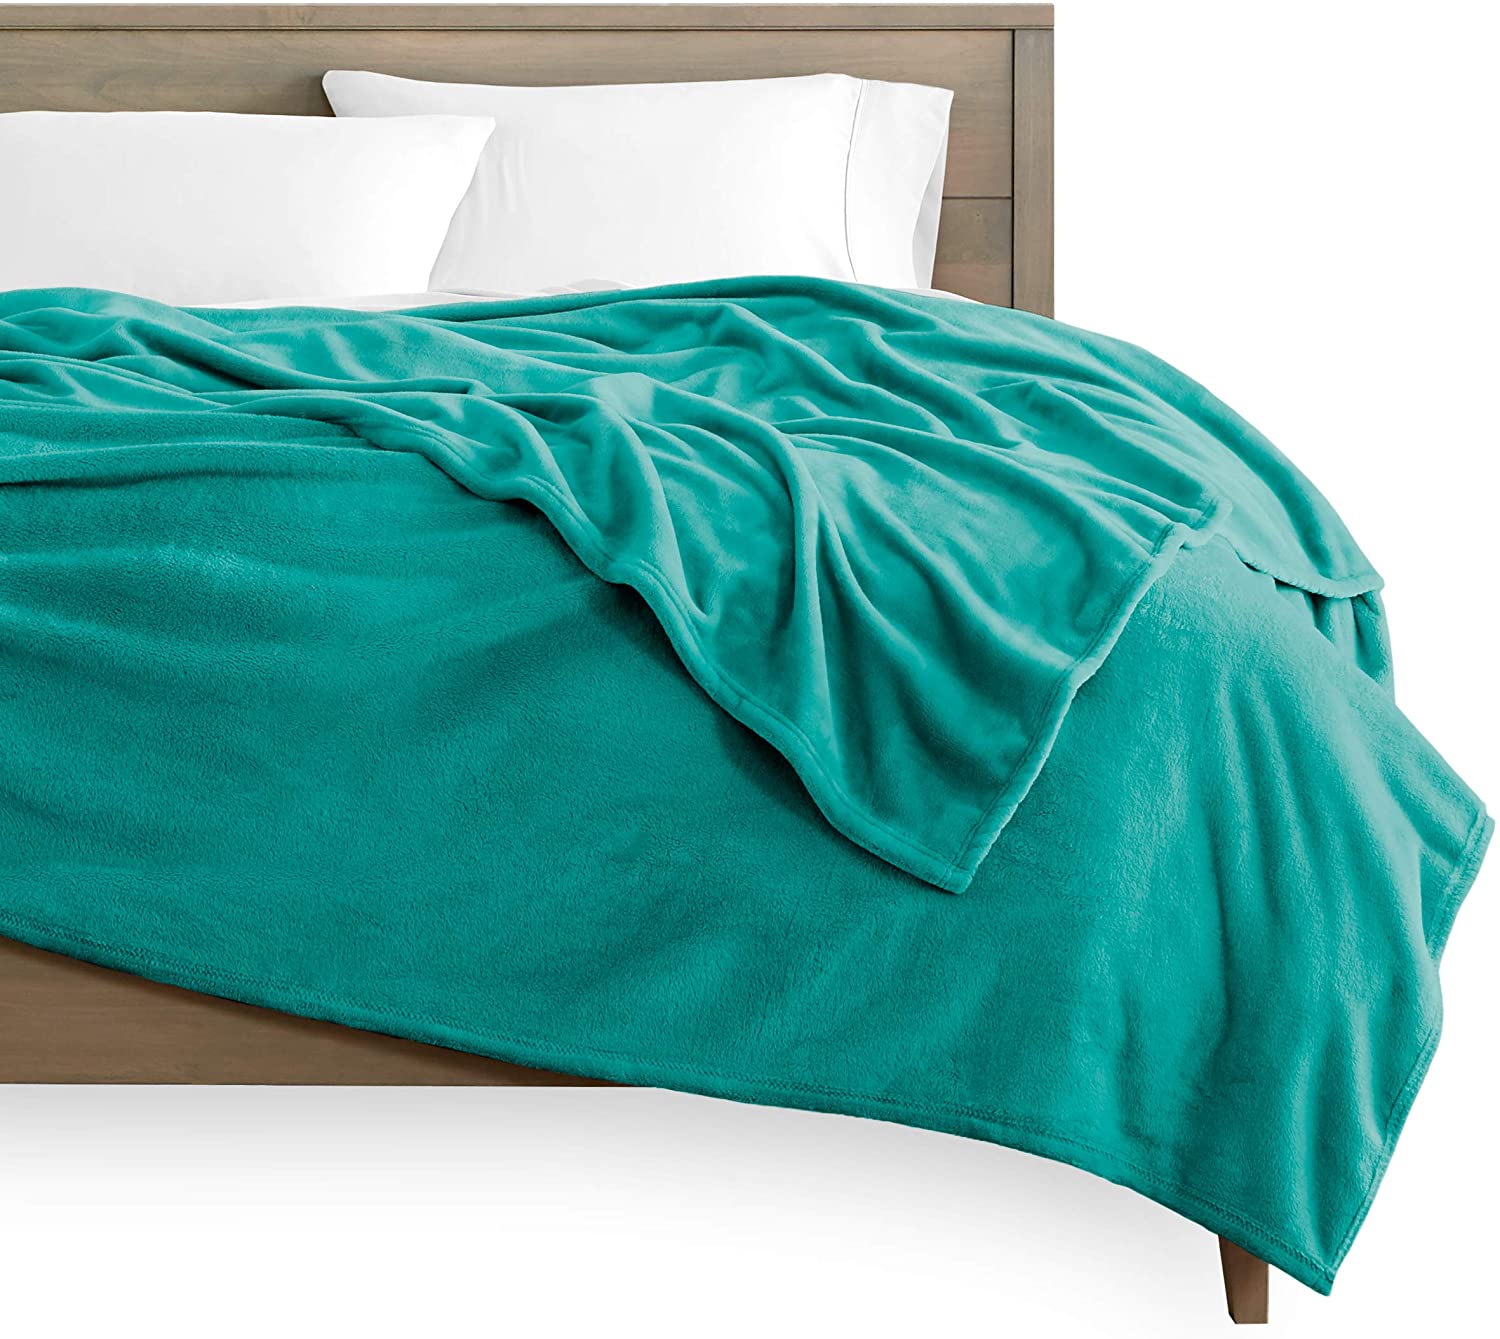 Soft Details about   Premium Reversible and Fleece Velvet Plush Blanket Fuzzy Warm 